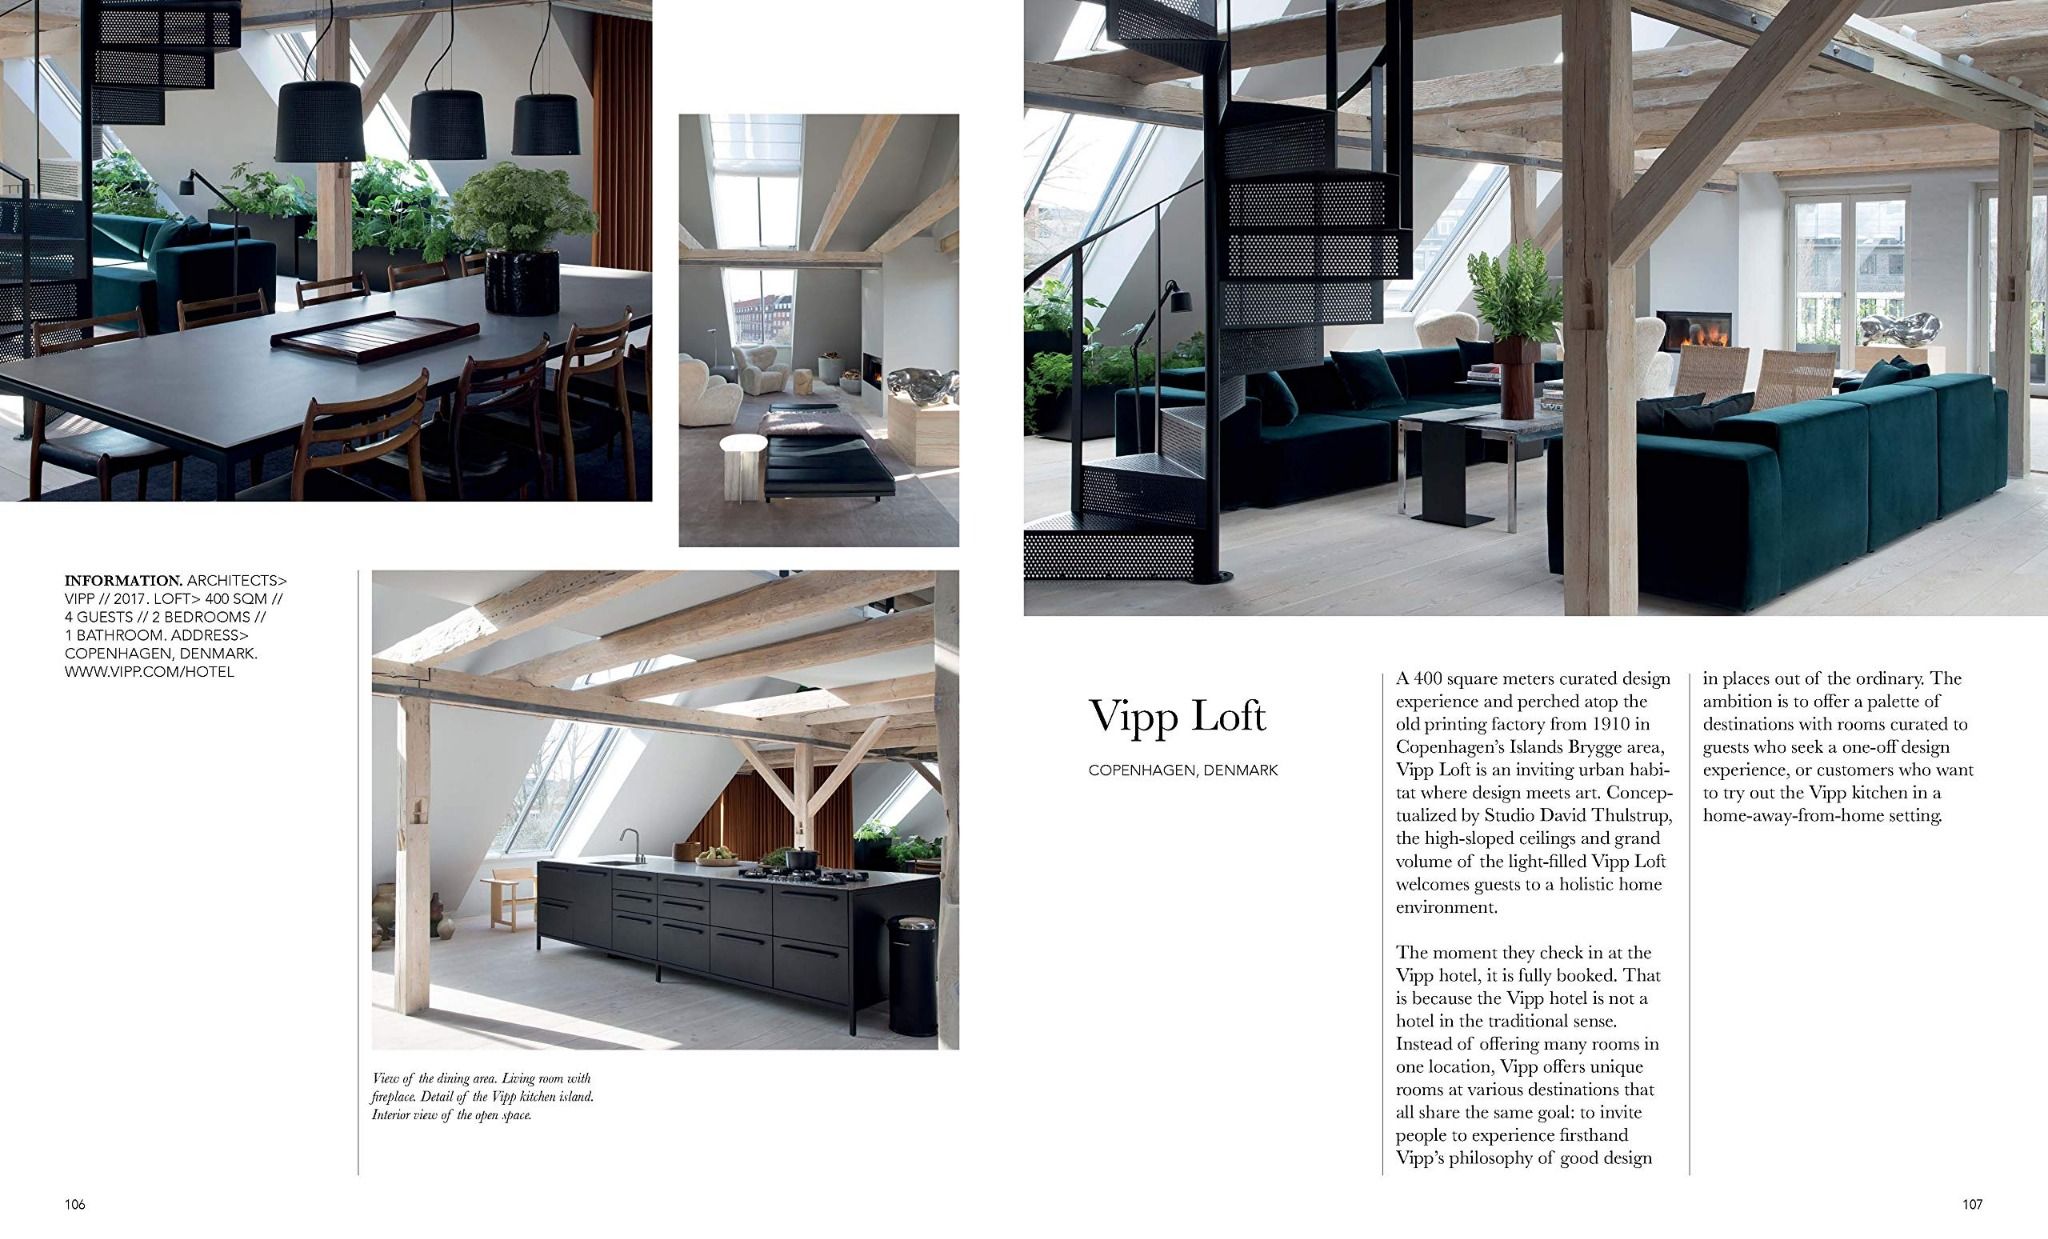  Where Architects Stay in Europe_Sibylle Kramer_9783037682326_Braun Publishing 